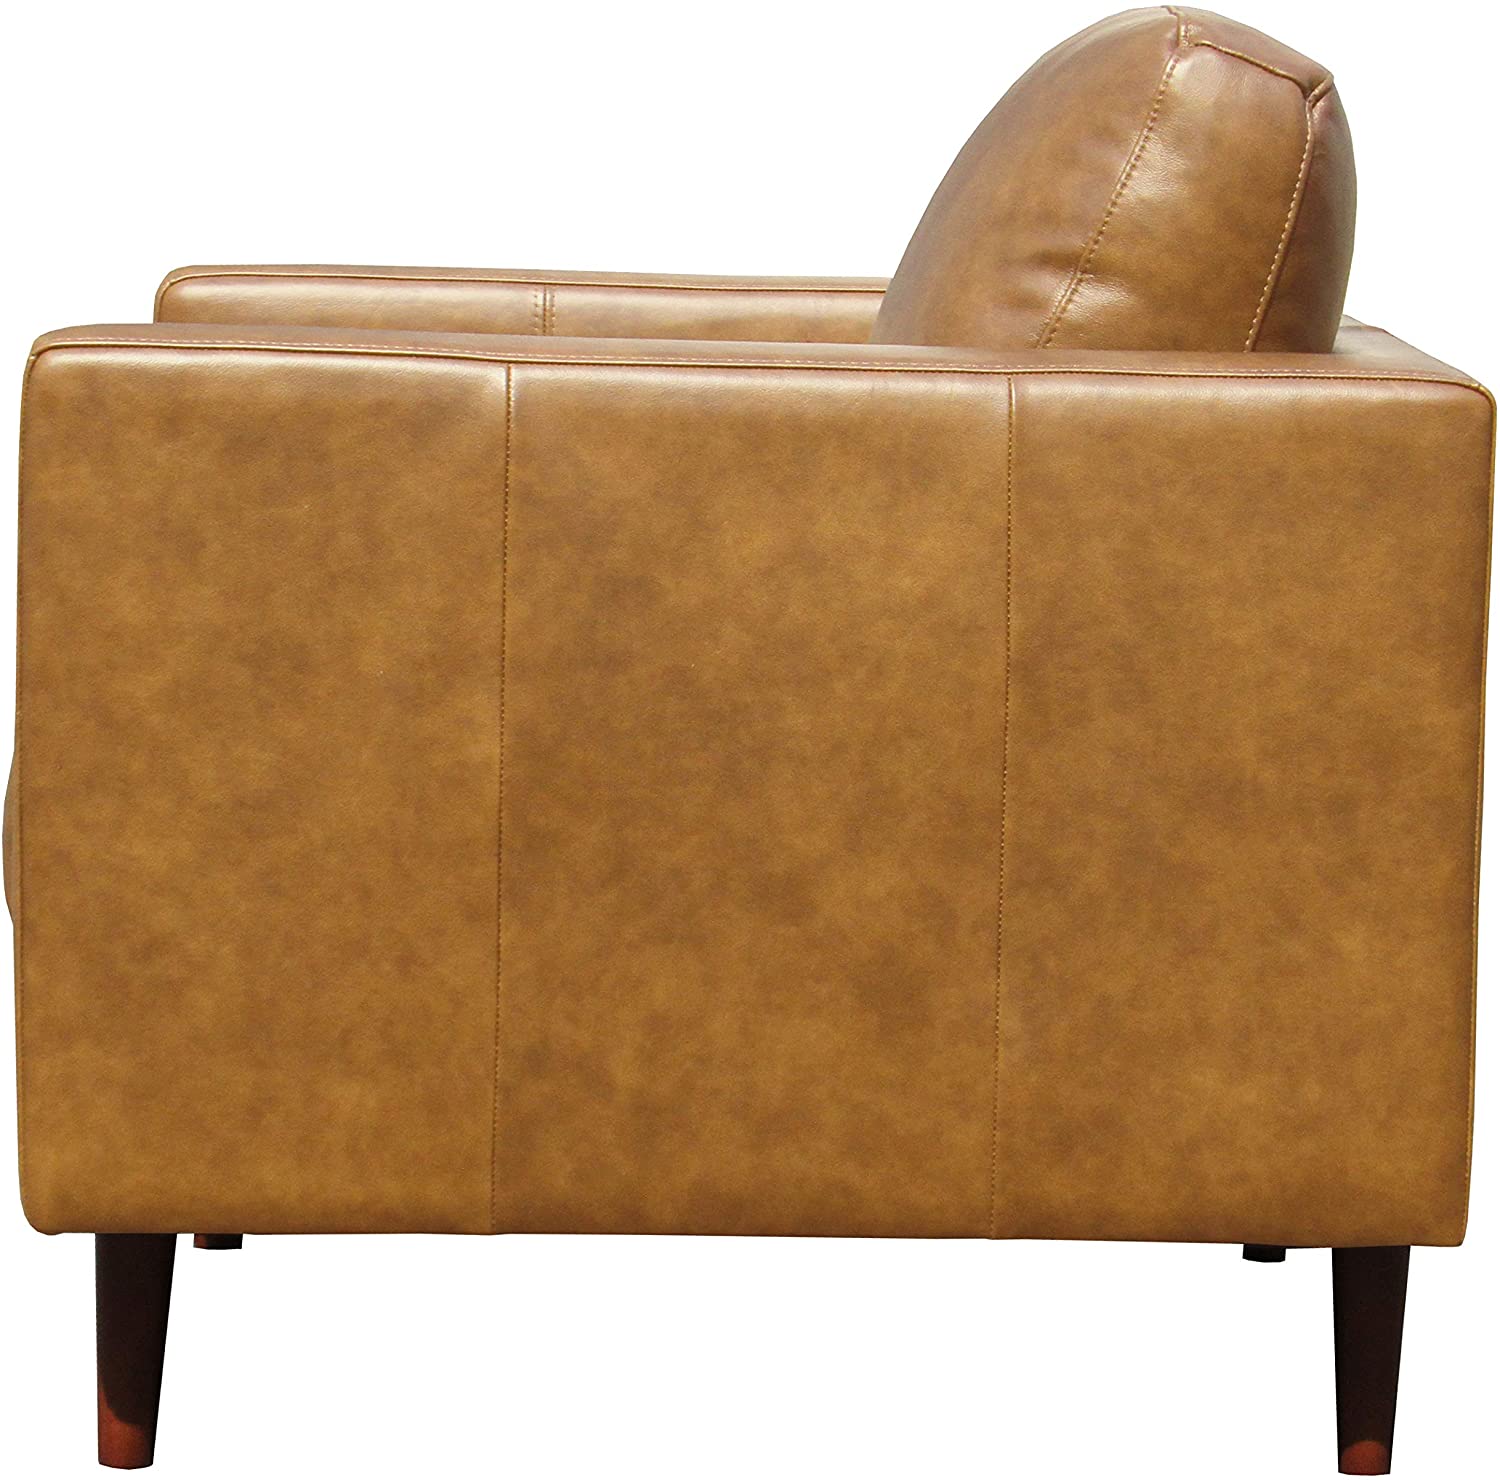 Sofa Chair: Stylish Living Room Chair